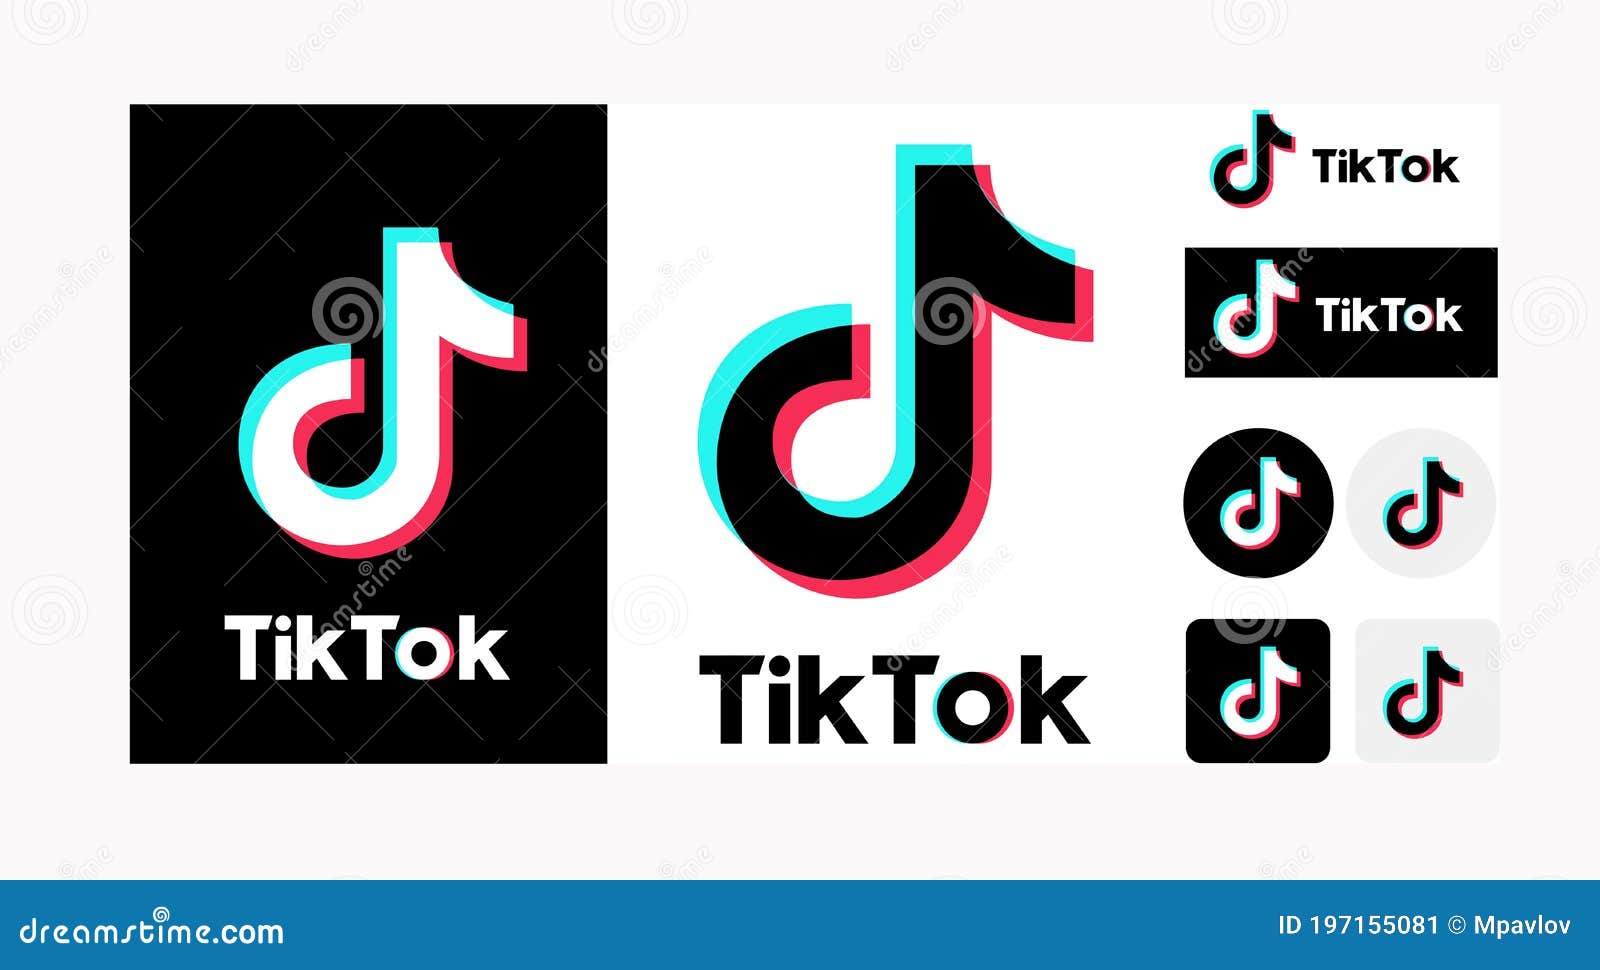 Logo tiktok TikTok: The